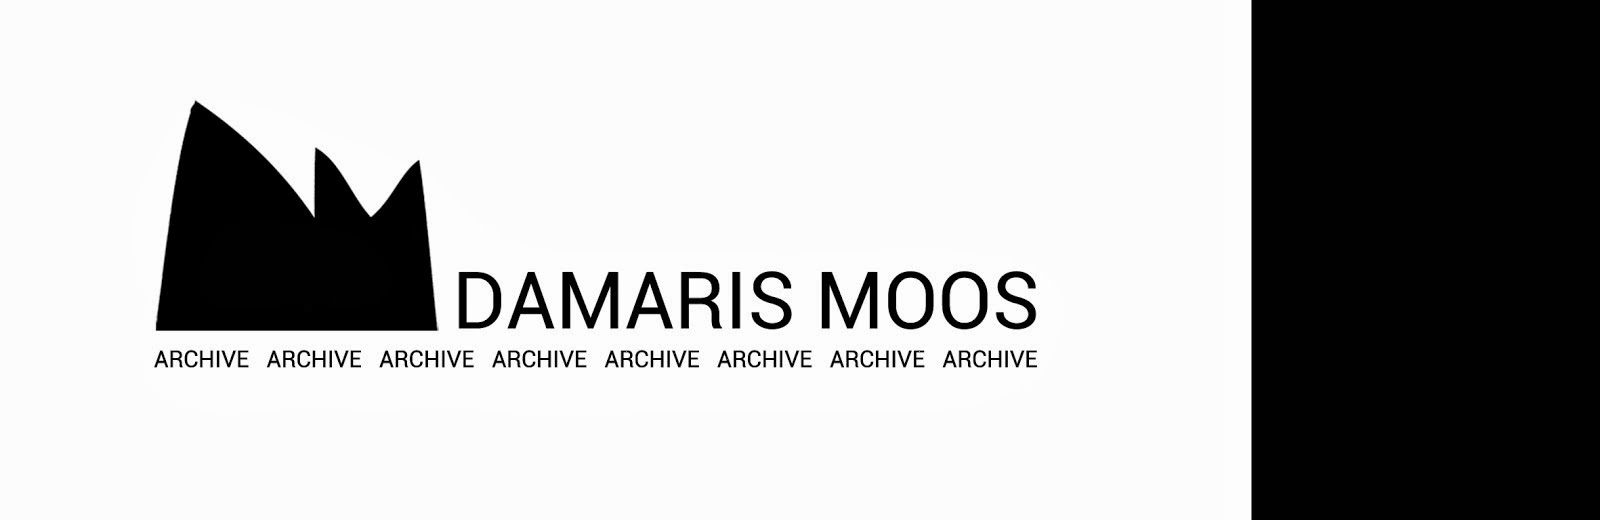 Damaris Moos Archive